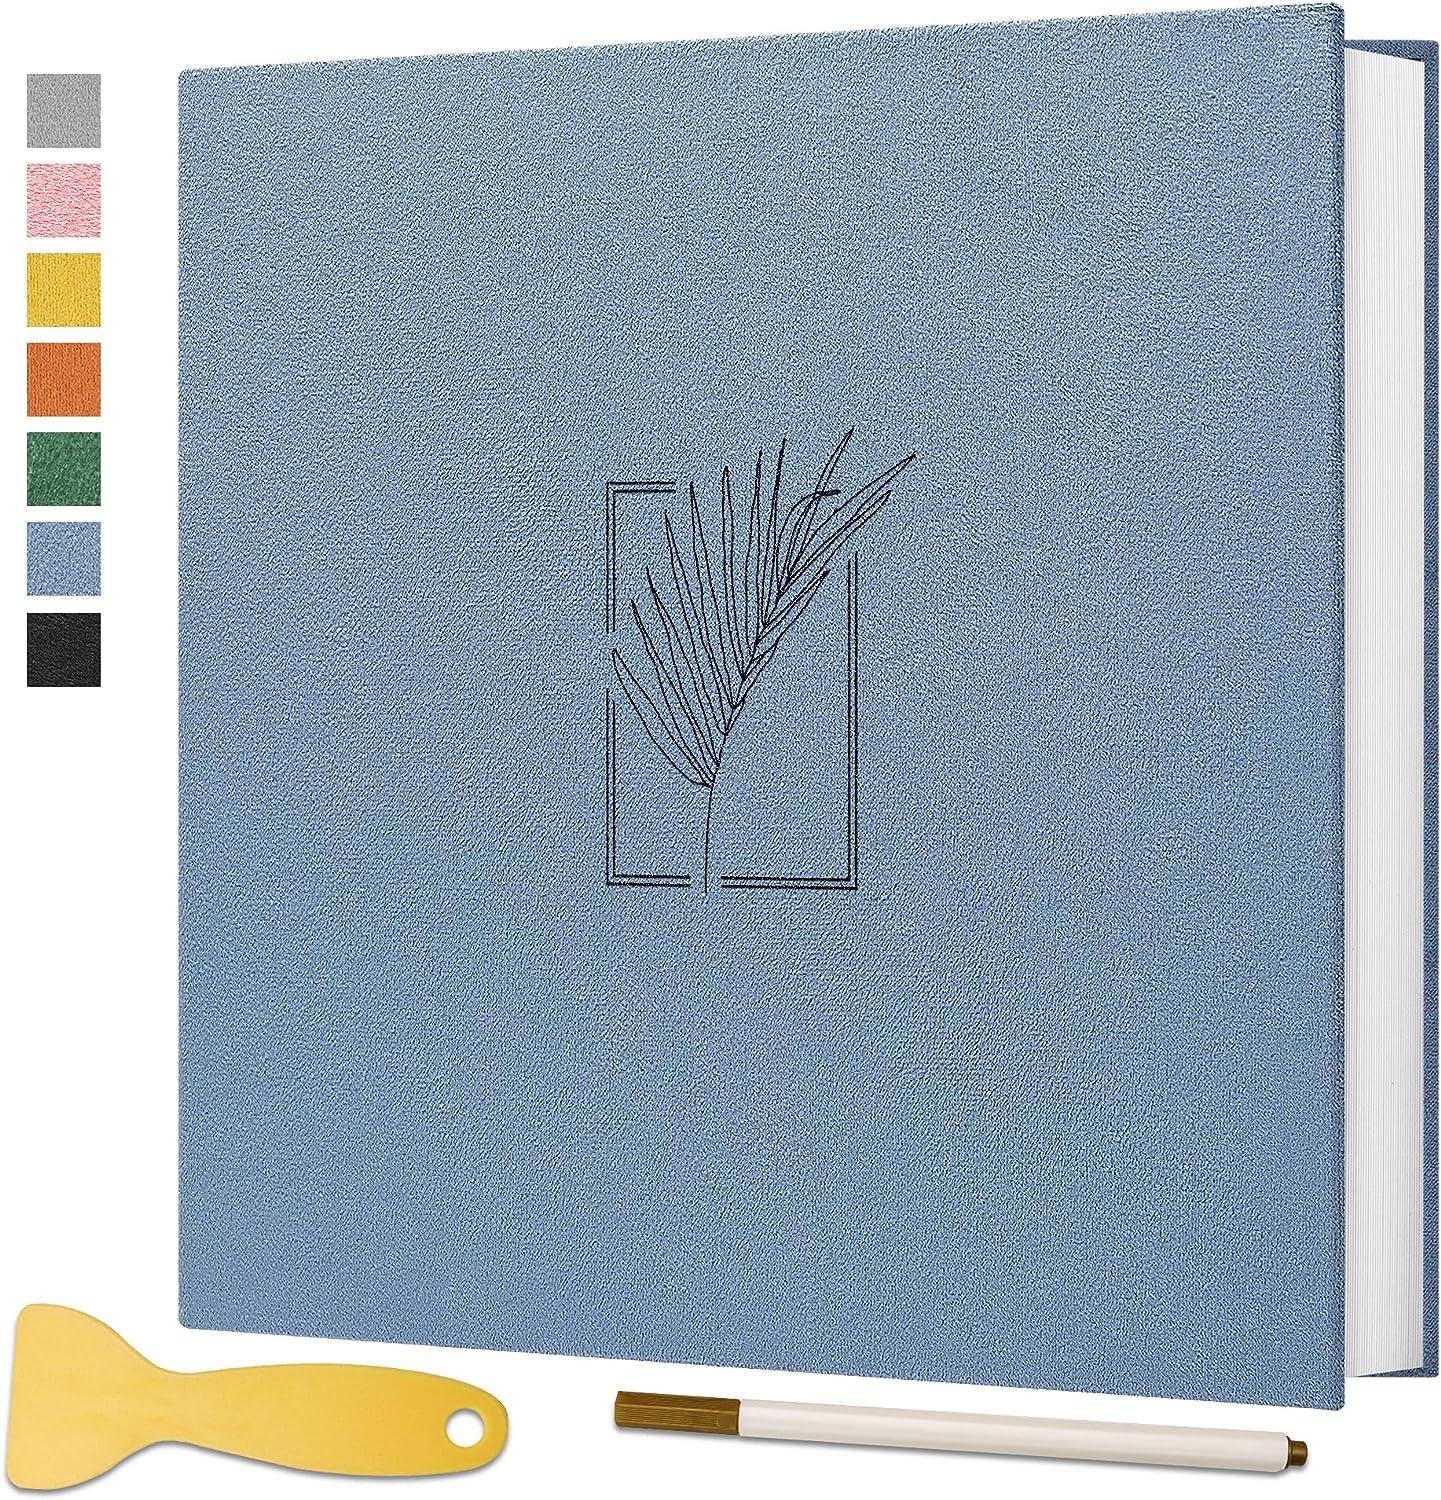 Premium Scrapbook Album | Scrapbook Photo Album with Writing Space | 100 Pages for Multiple Photo Sizes, 4x6, 5x7, 6x8, 8x10 | Acid Free Photo Album